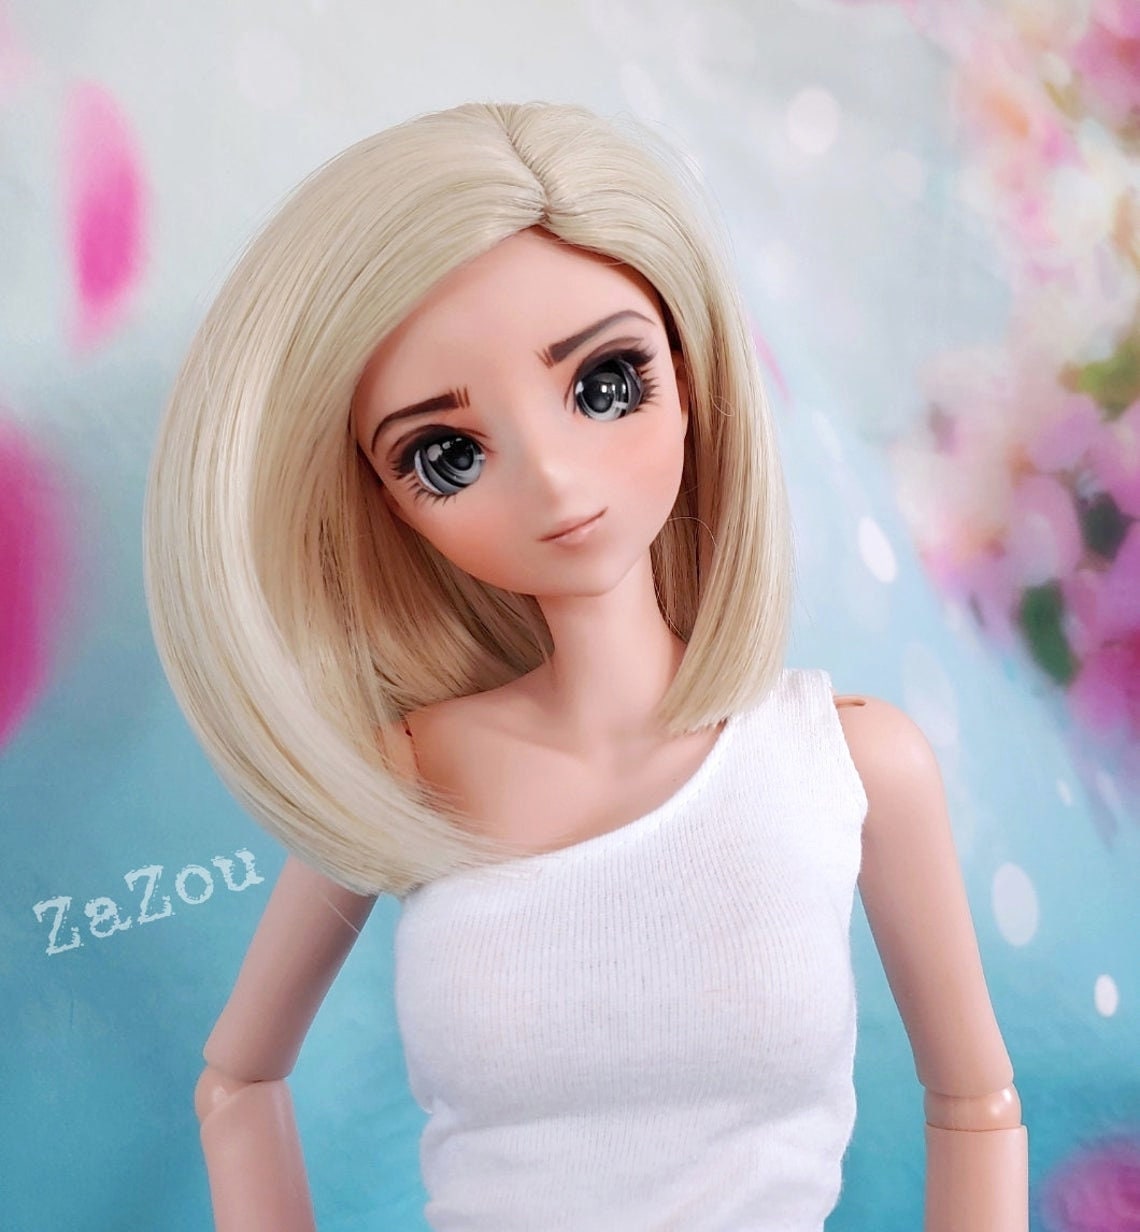 Custom doll Wig for Smart Dolls- Heat Safe - Tangle Resistant- 8.5" head size of Bjd, SD, Dollfie Dream dolls  Blonde Bob